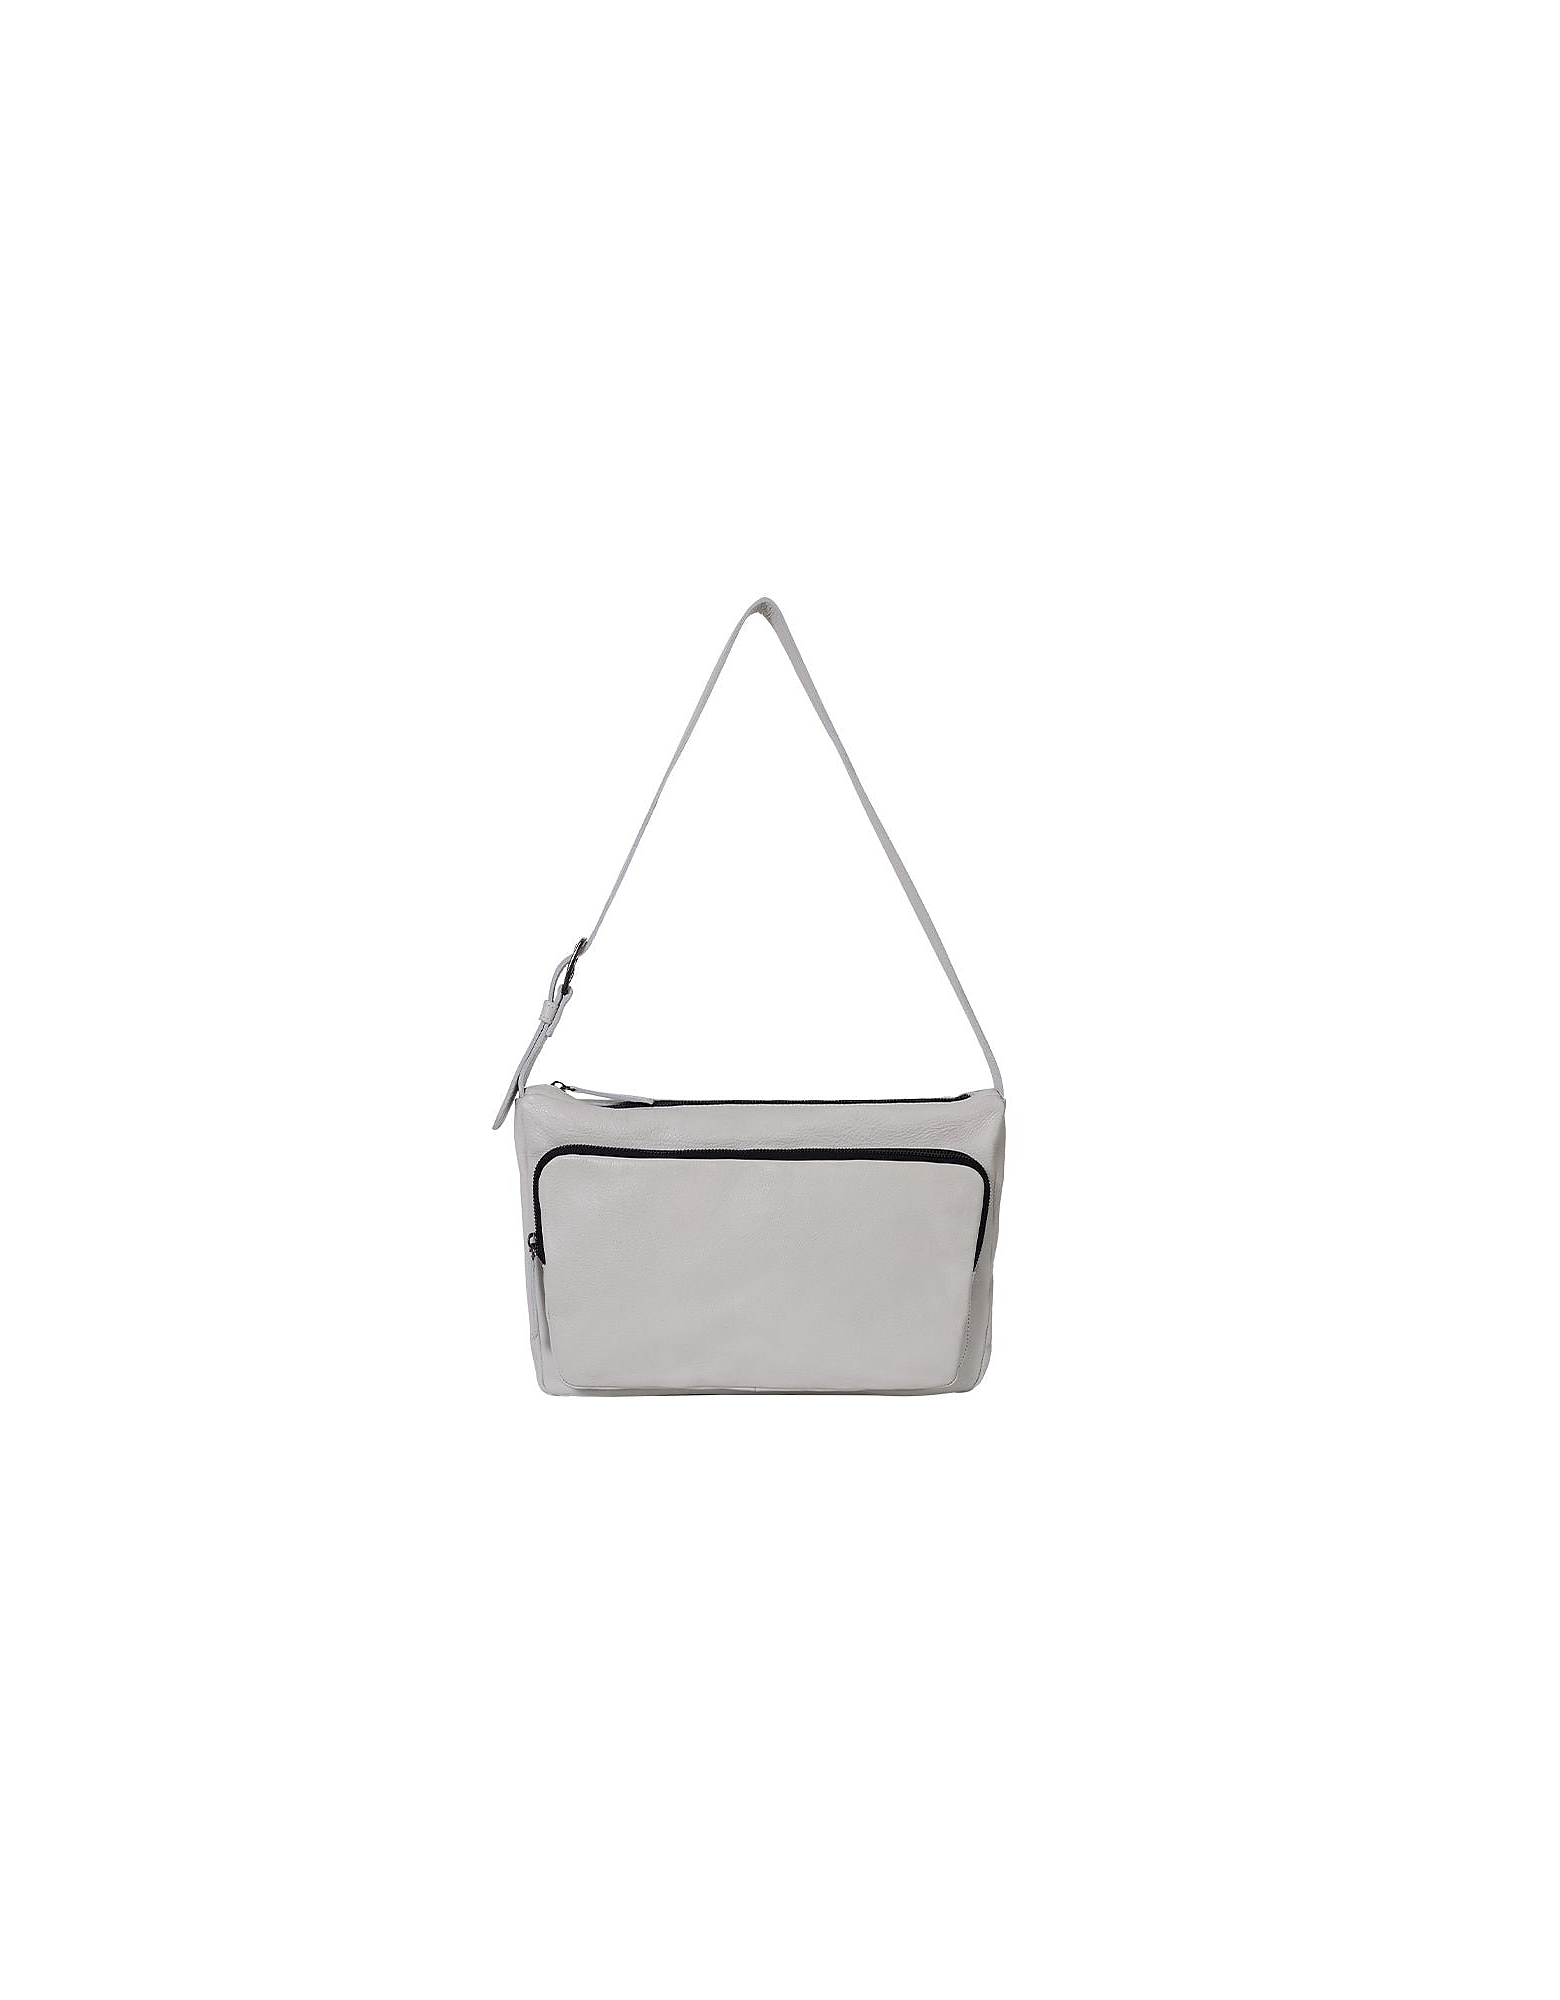 Brussosa Designer Handbags Harry - Shoulder Bag In Blanc